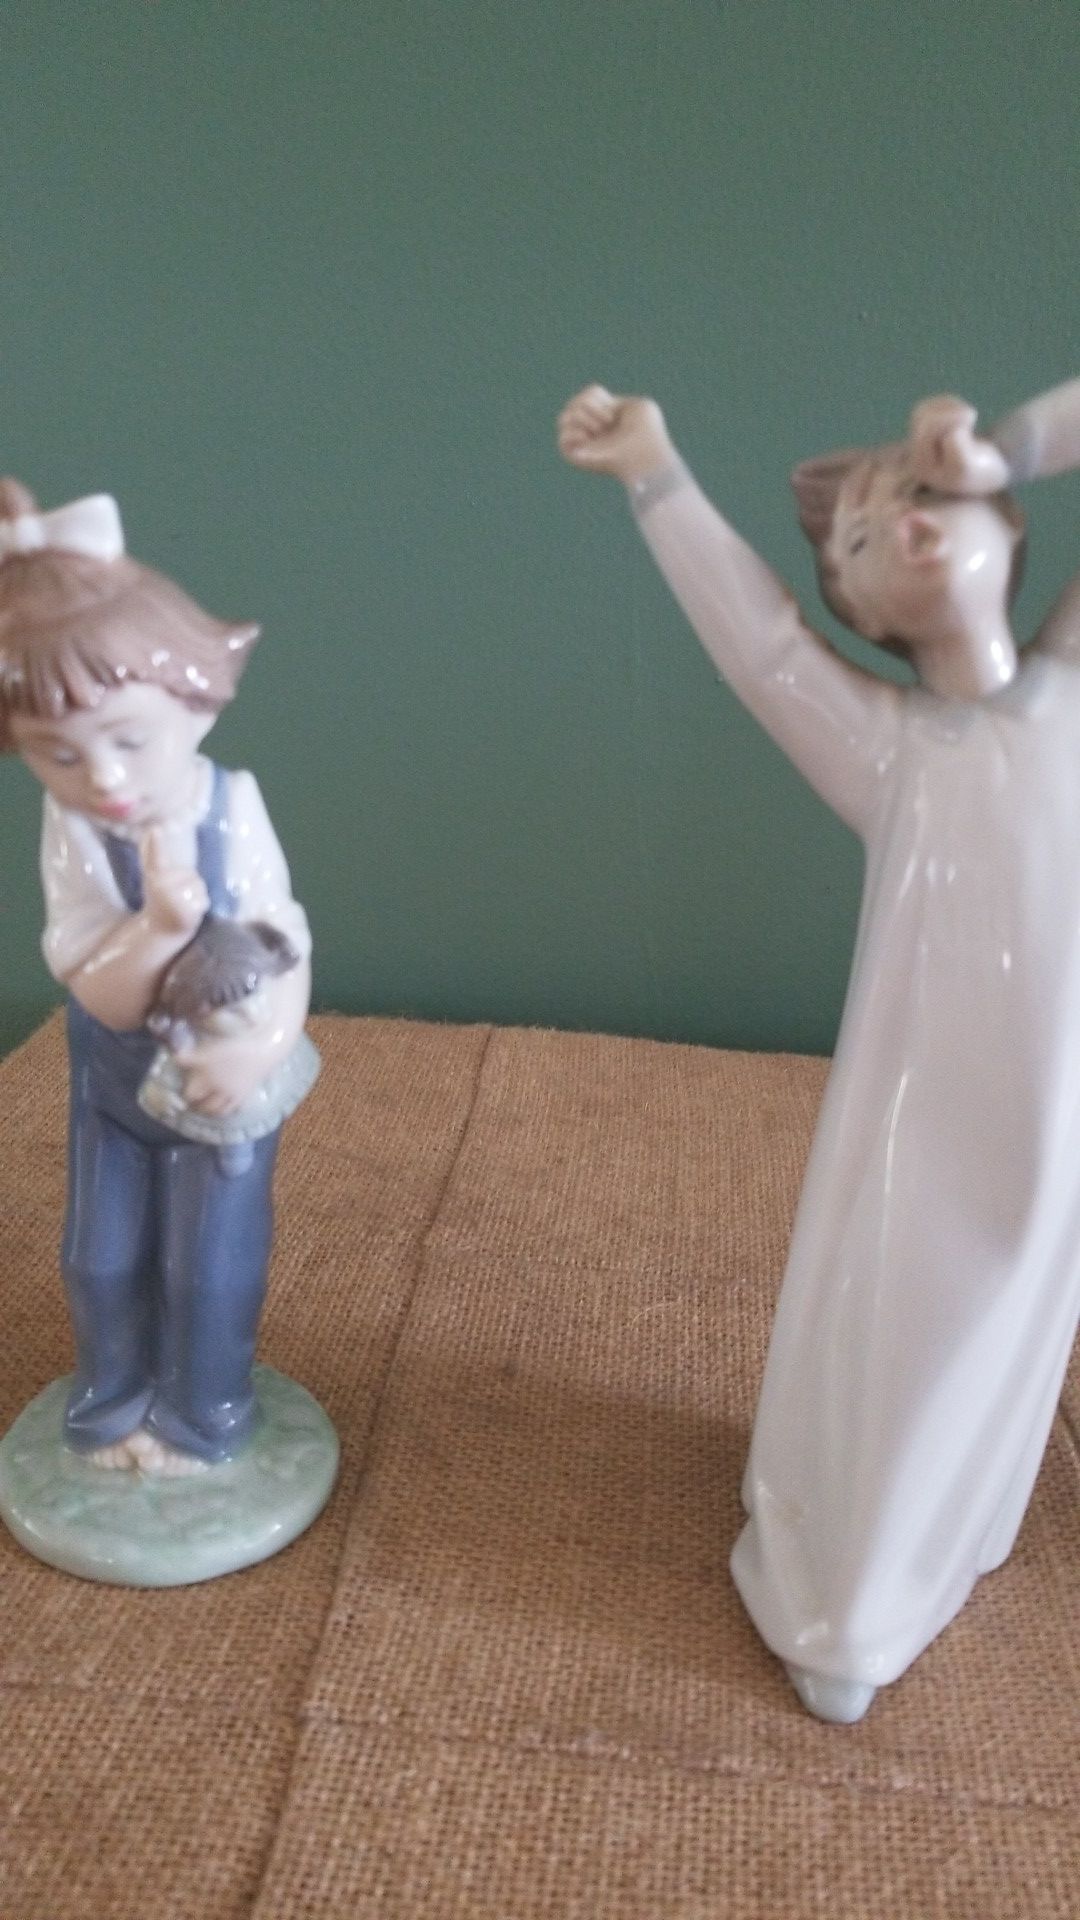 Lladro boy and Nao girl figurines.